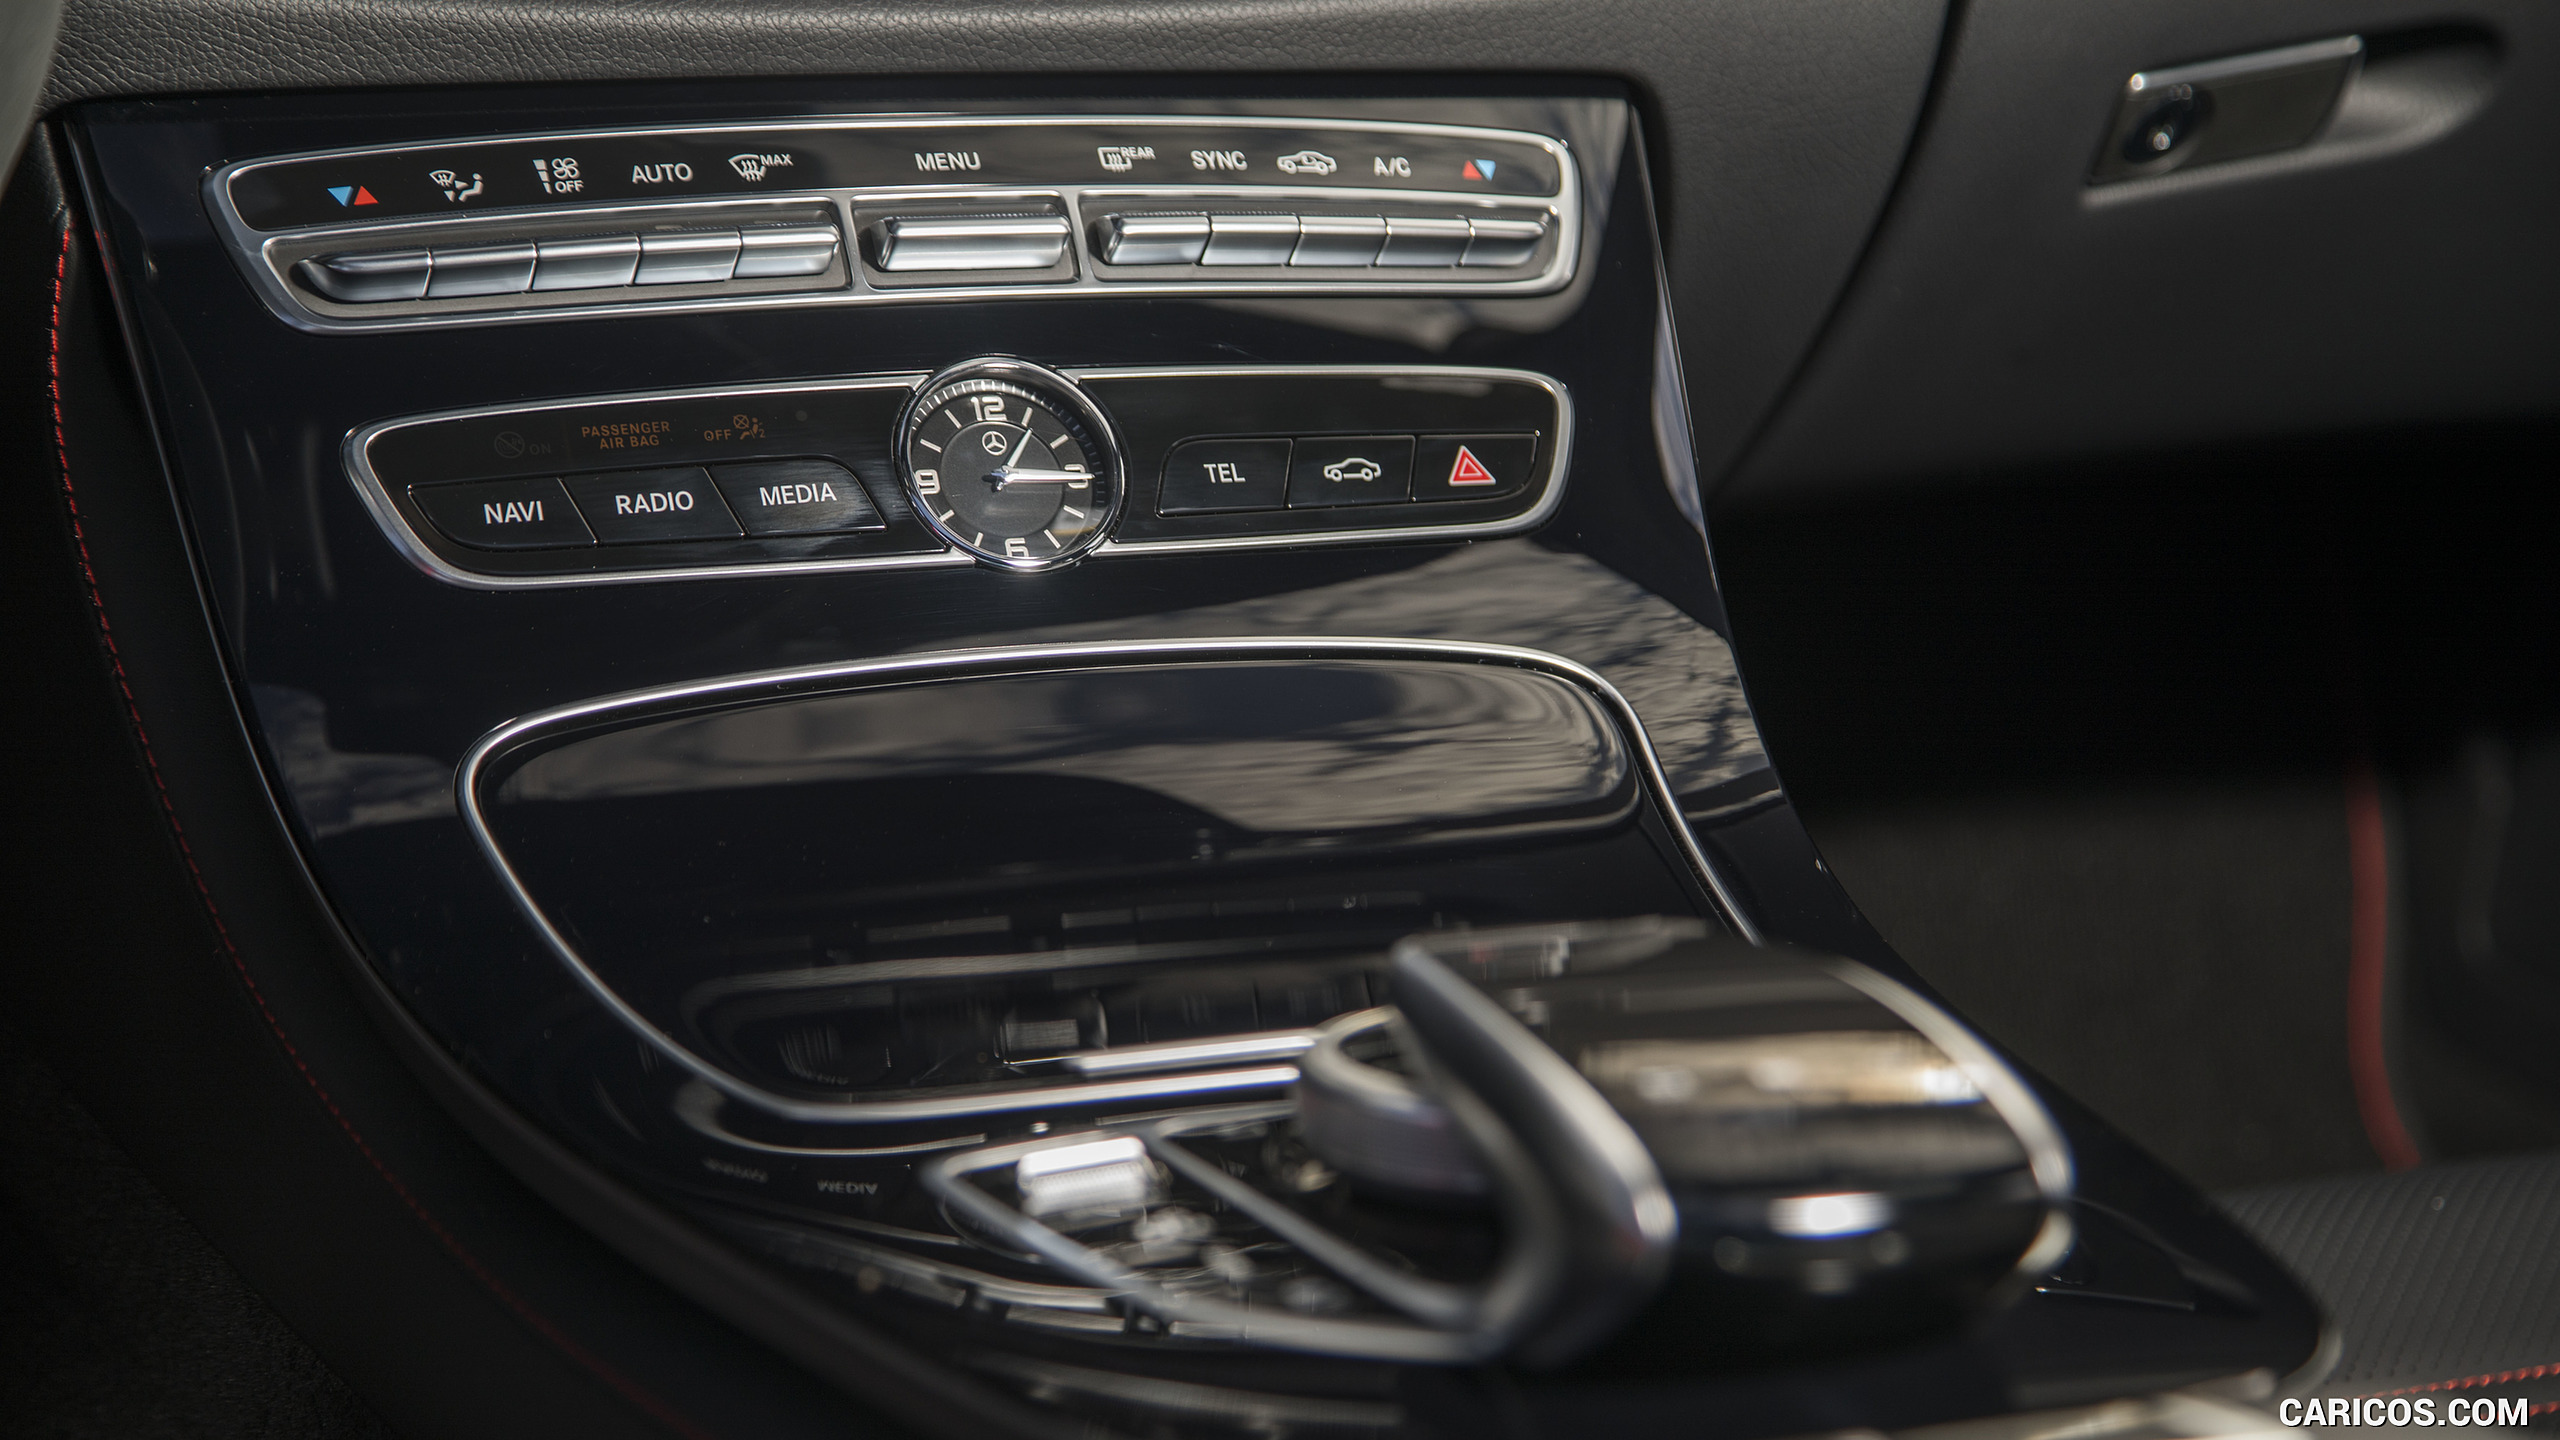 2017 Mercedes-AMG E43 Sedan (US-Spec) - Interior, Controls, #45 of 55